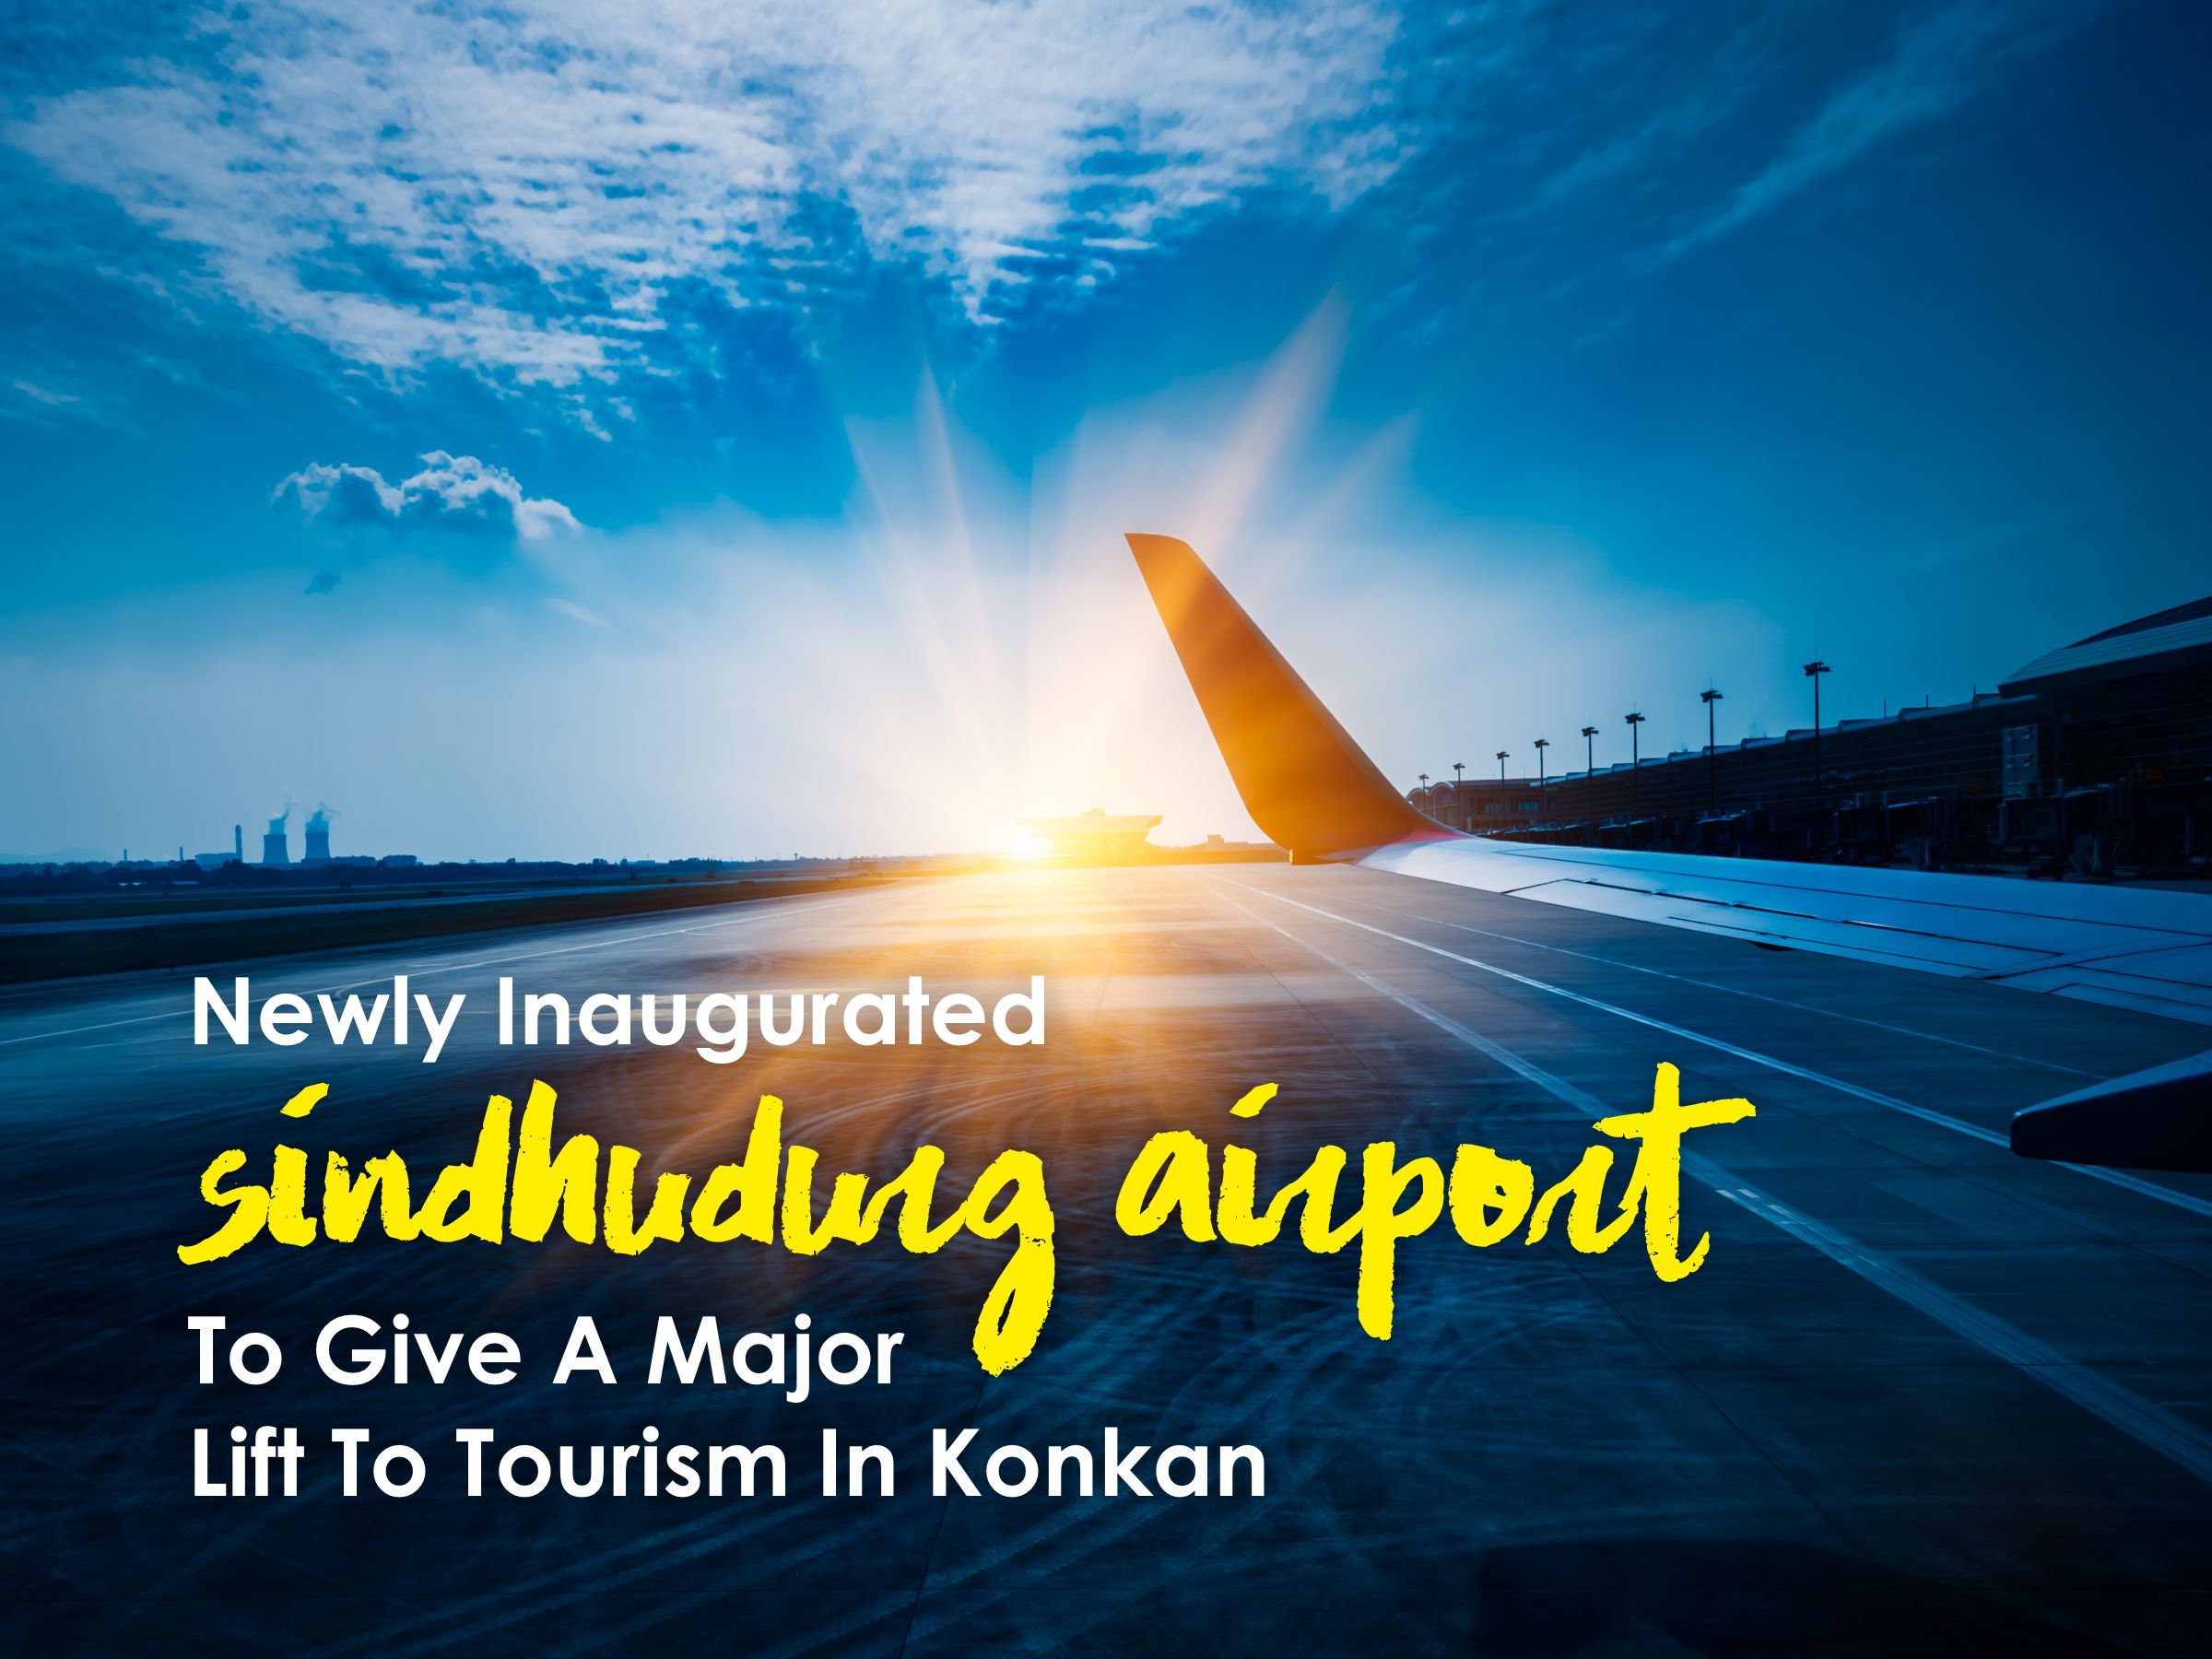 Tourism In Konkan